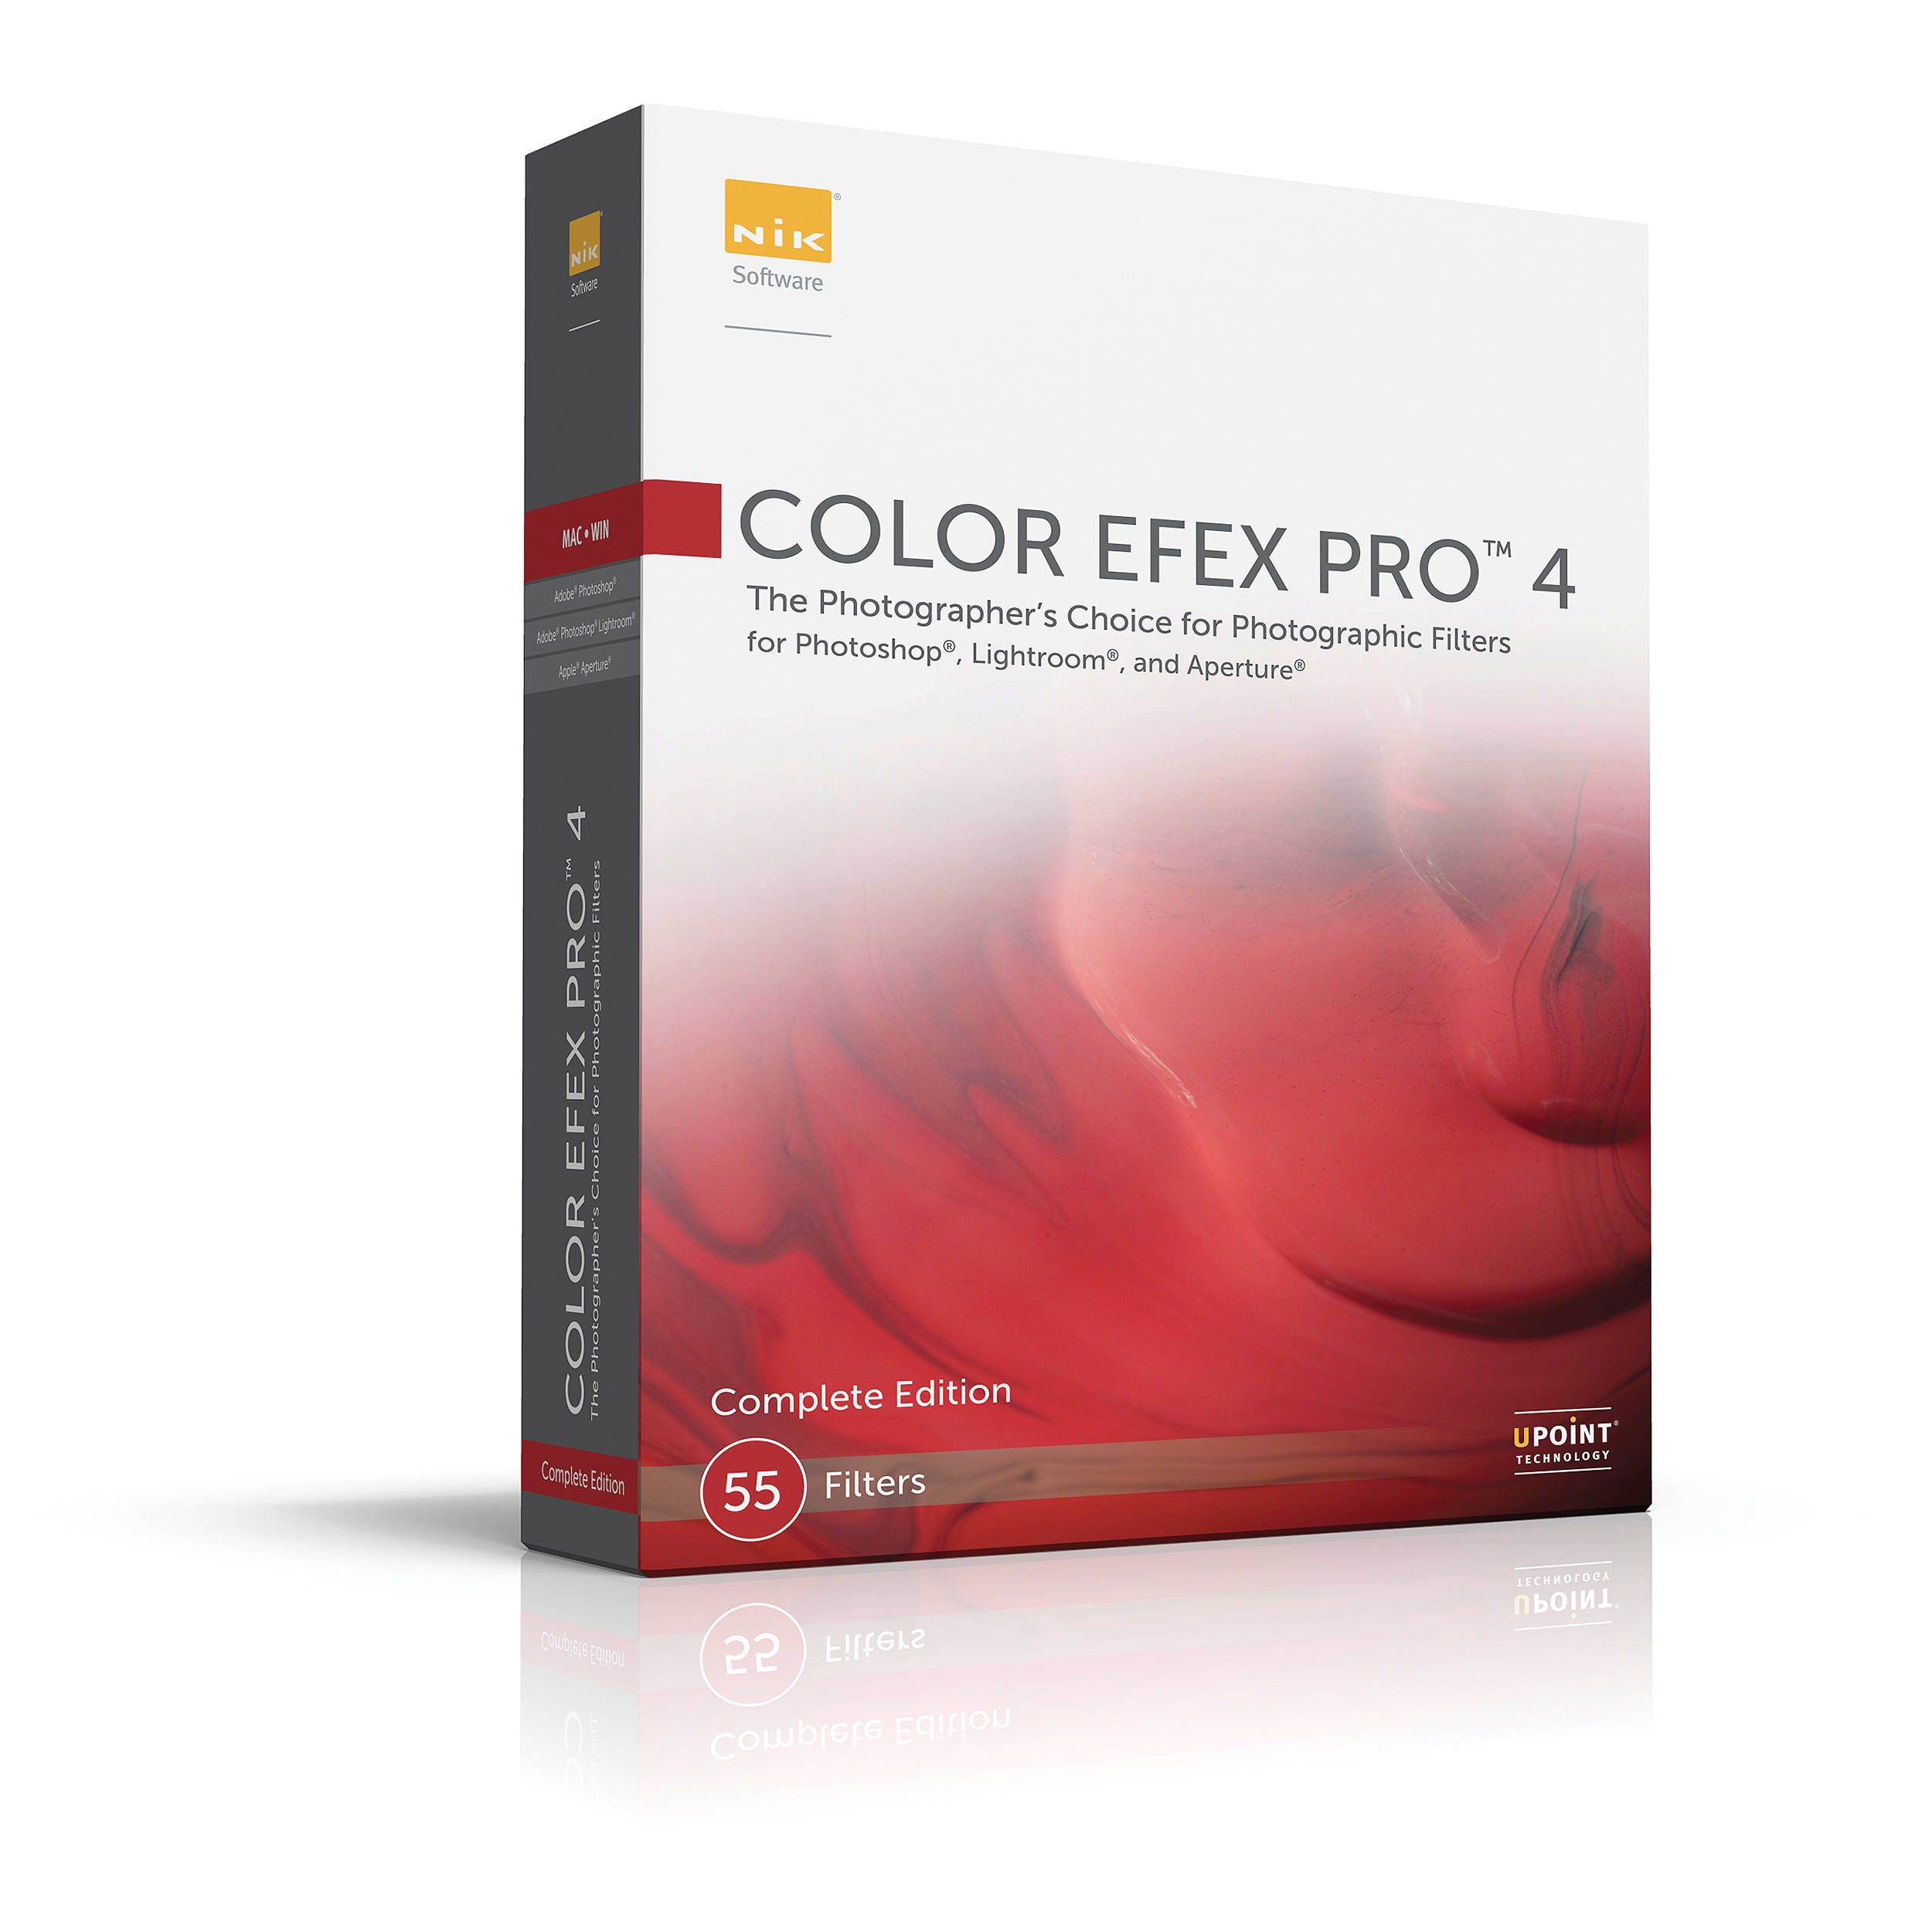 Color Efex Pro 4.3.24 Crack + Activation Code Free Download